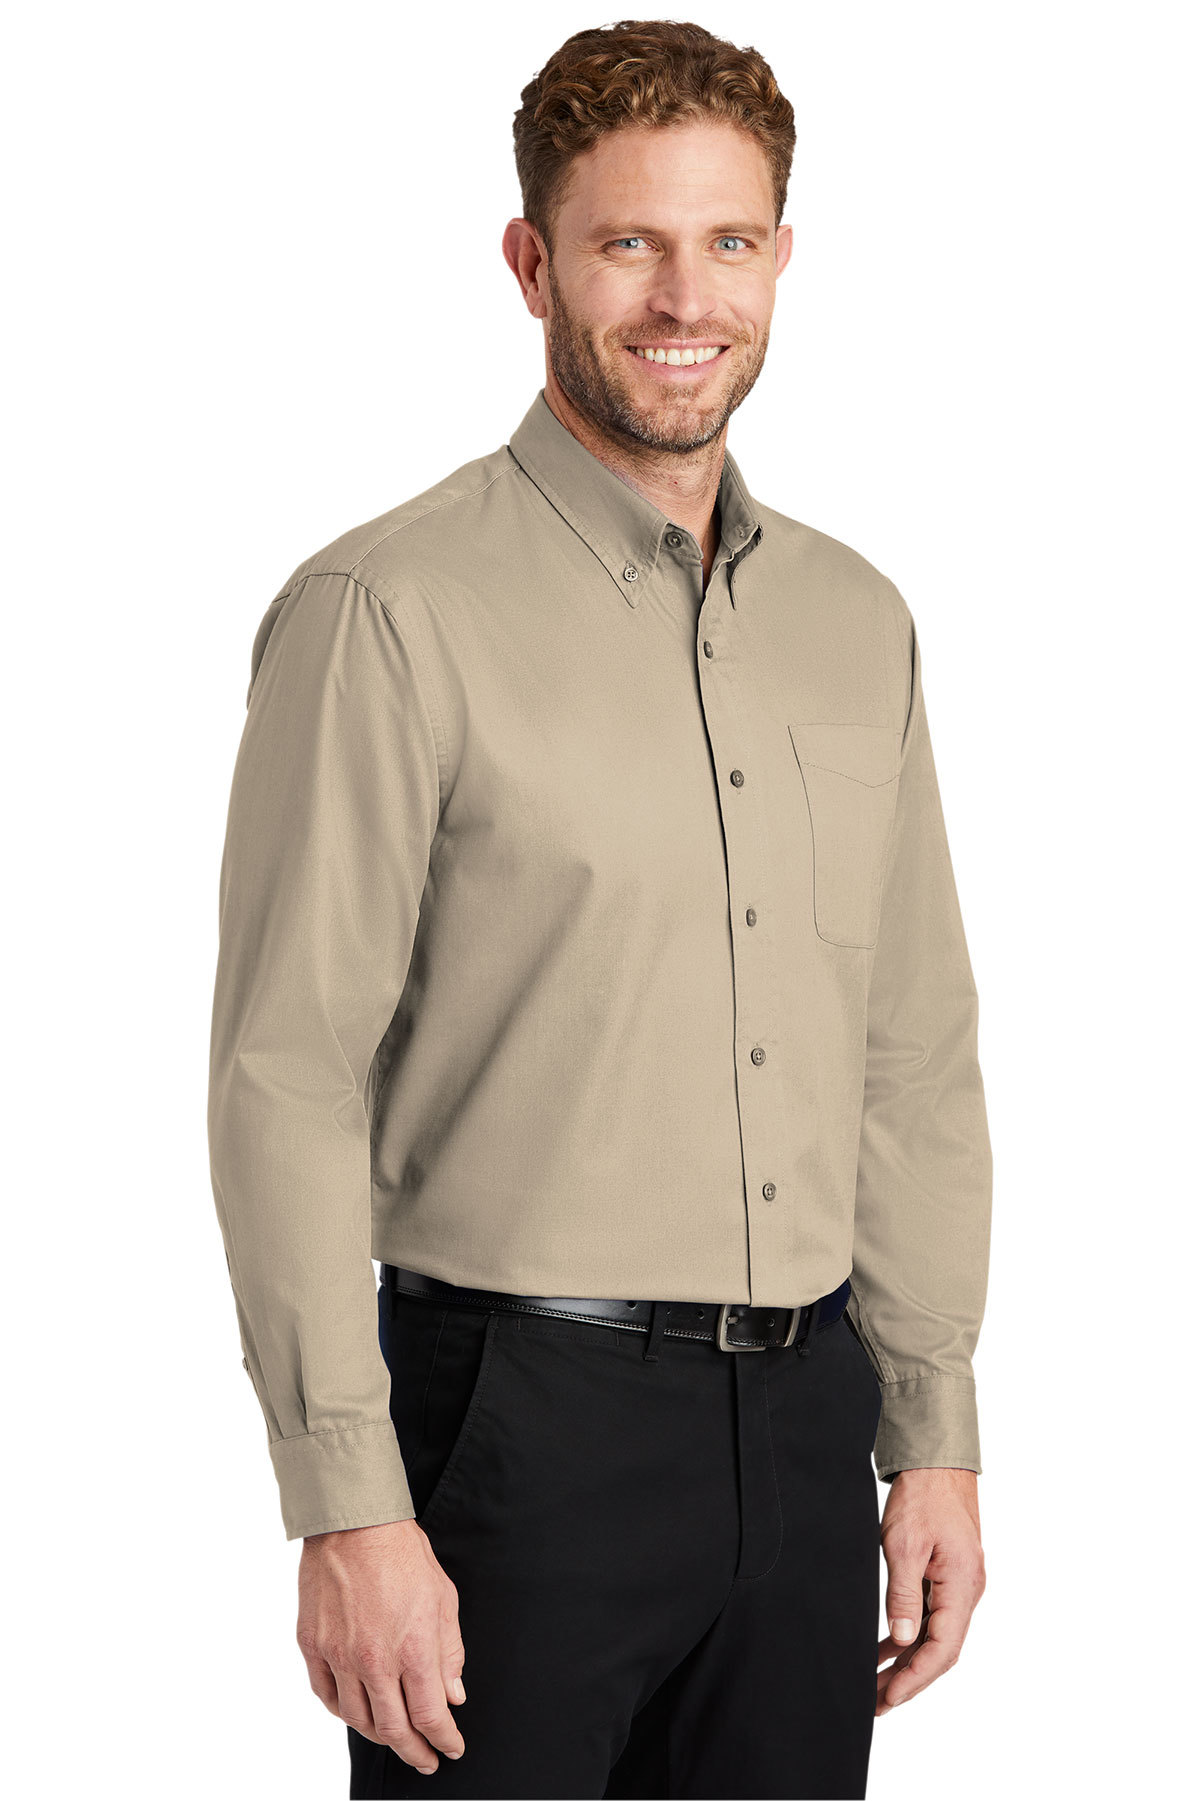 CornerStone - Long Sleeve SuperPro ™ Twill Shirt | Product | Company ...